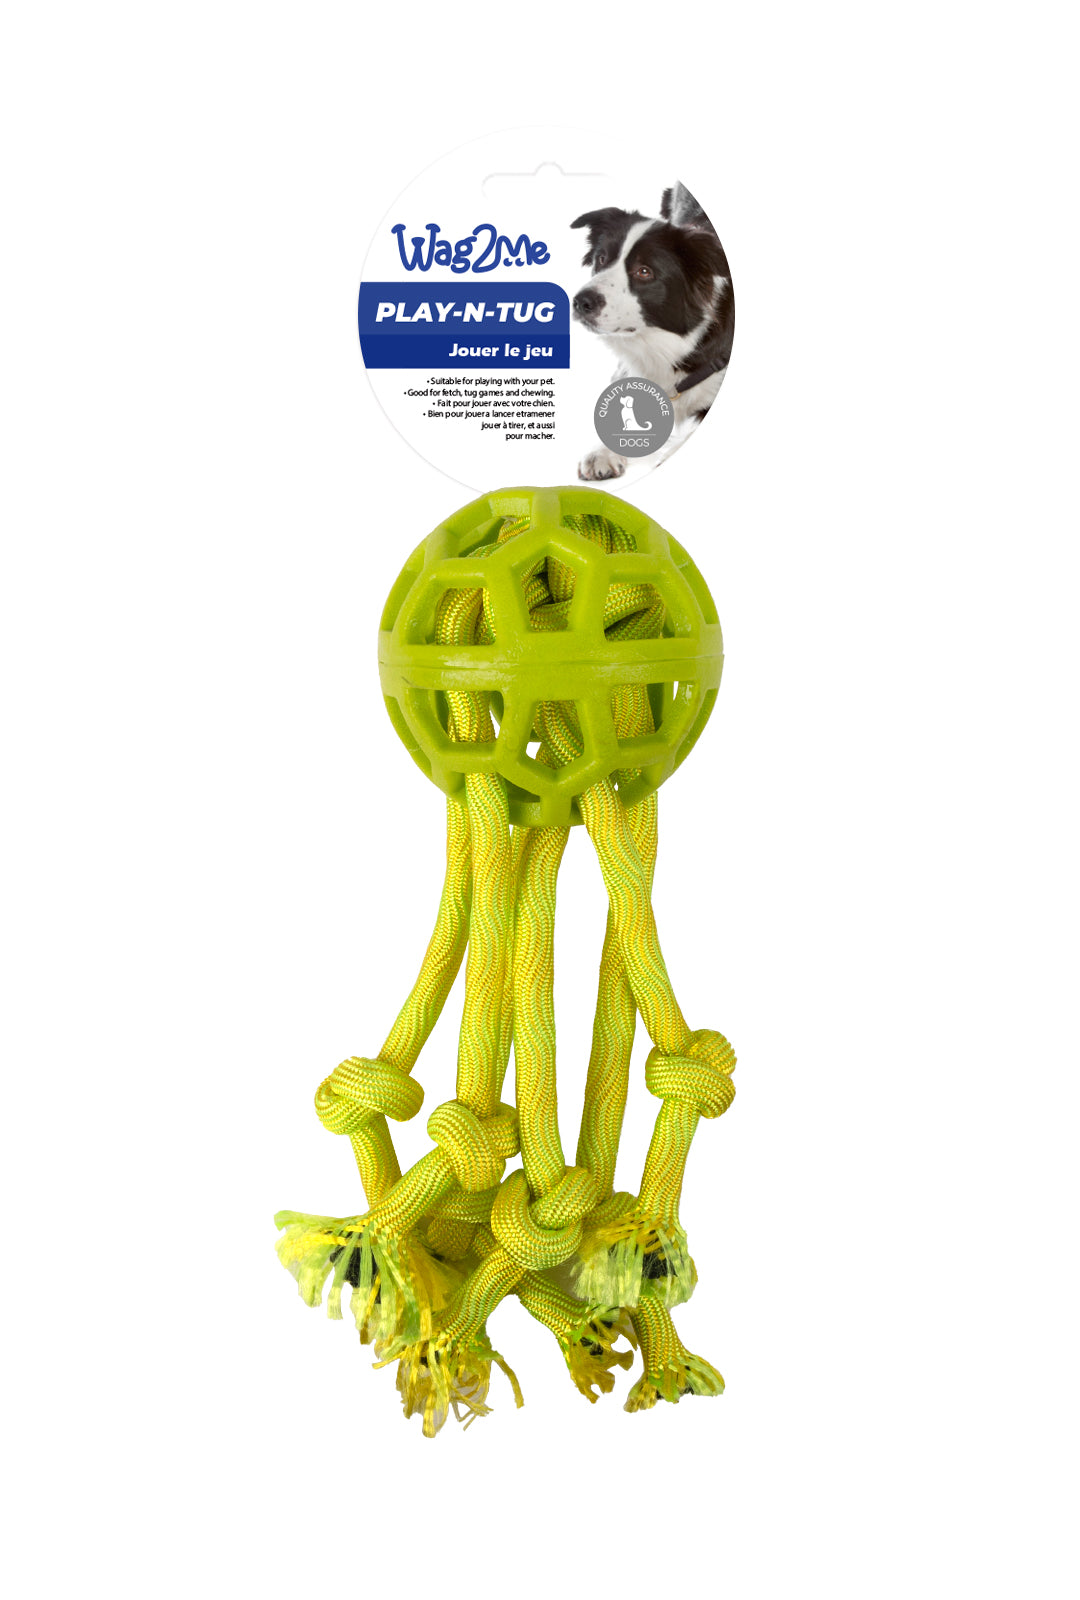 Wag2me PLAY-N -TUG Dog Toy